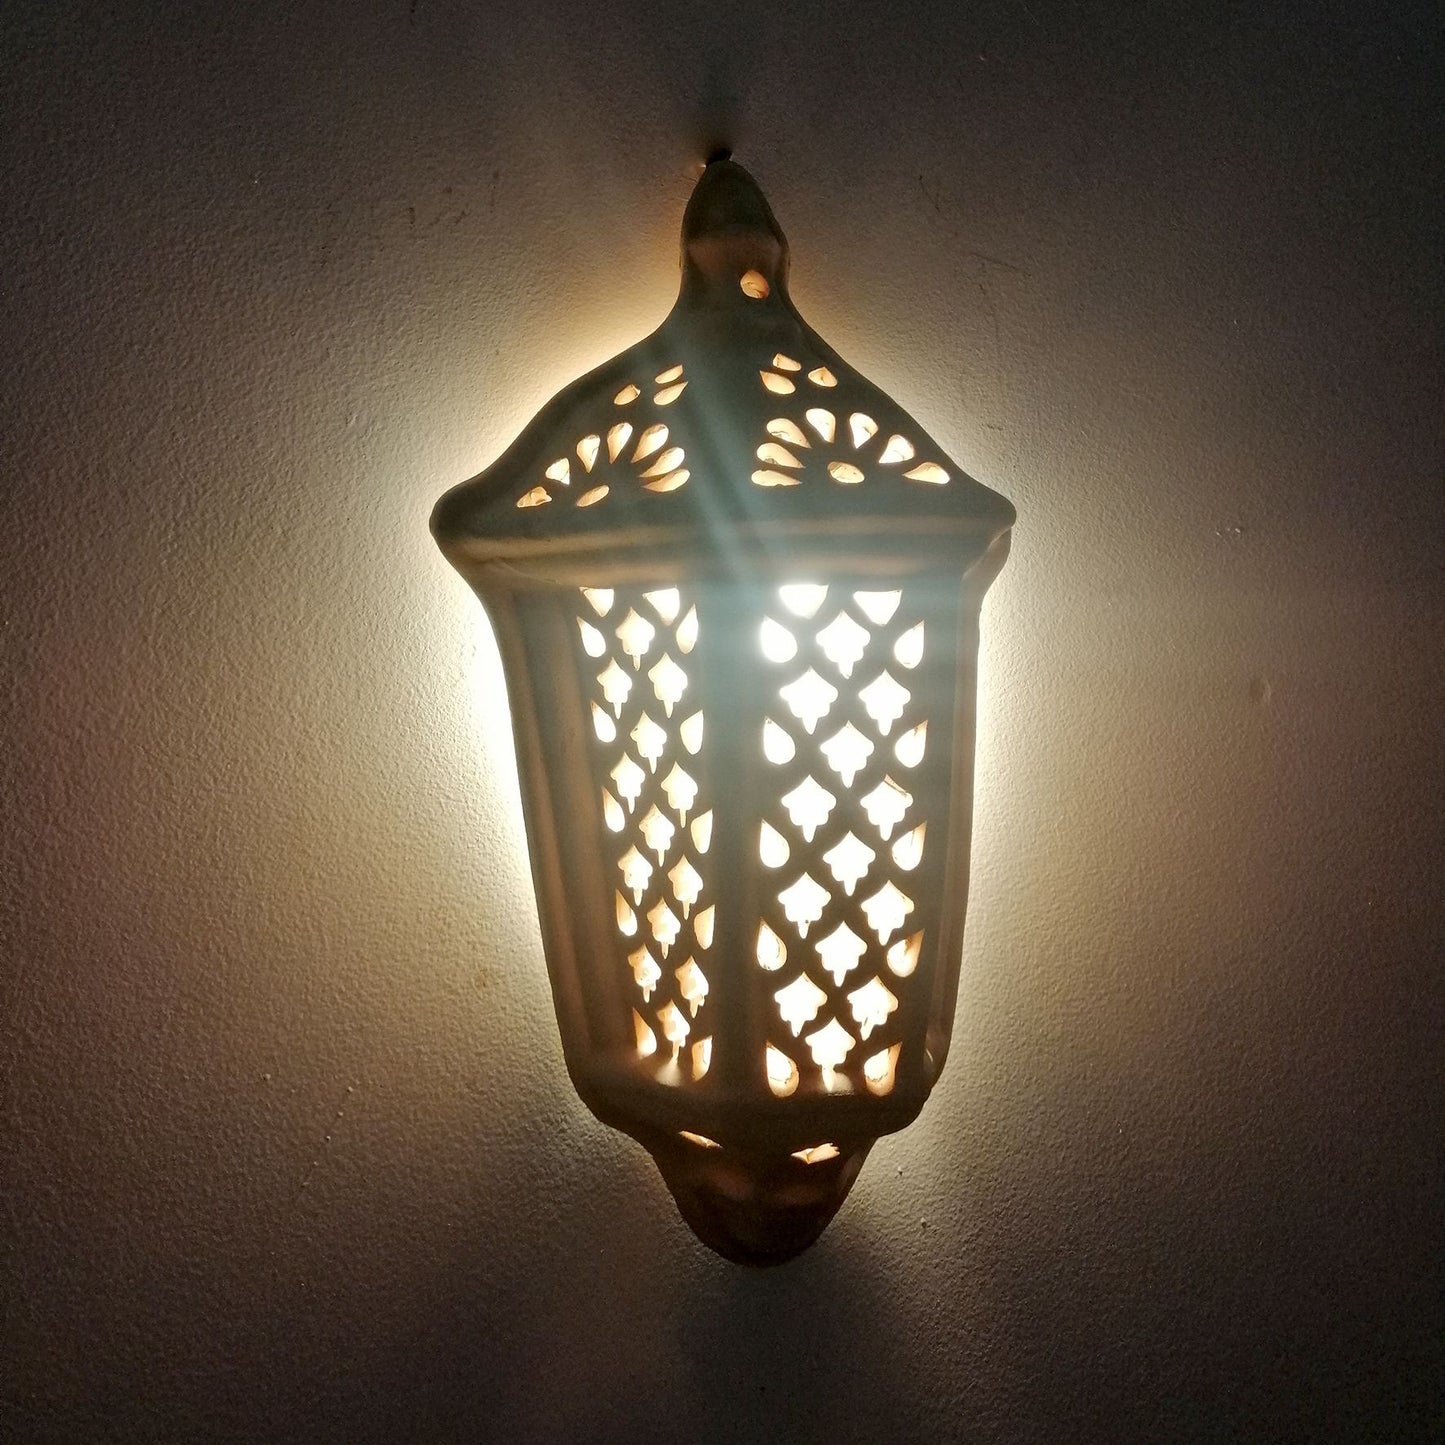 Arredo Etnico Applique Parete Lampada Terracotta Tunisina Marocchina 0211201008